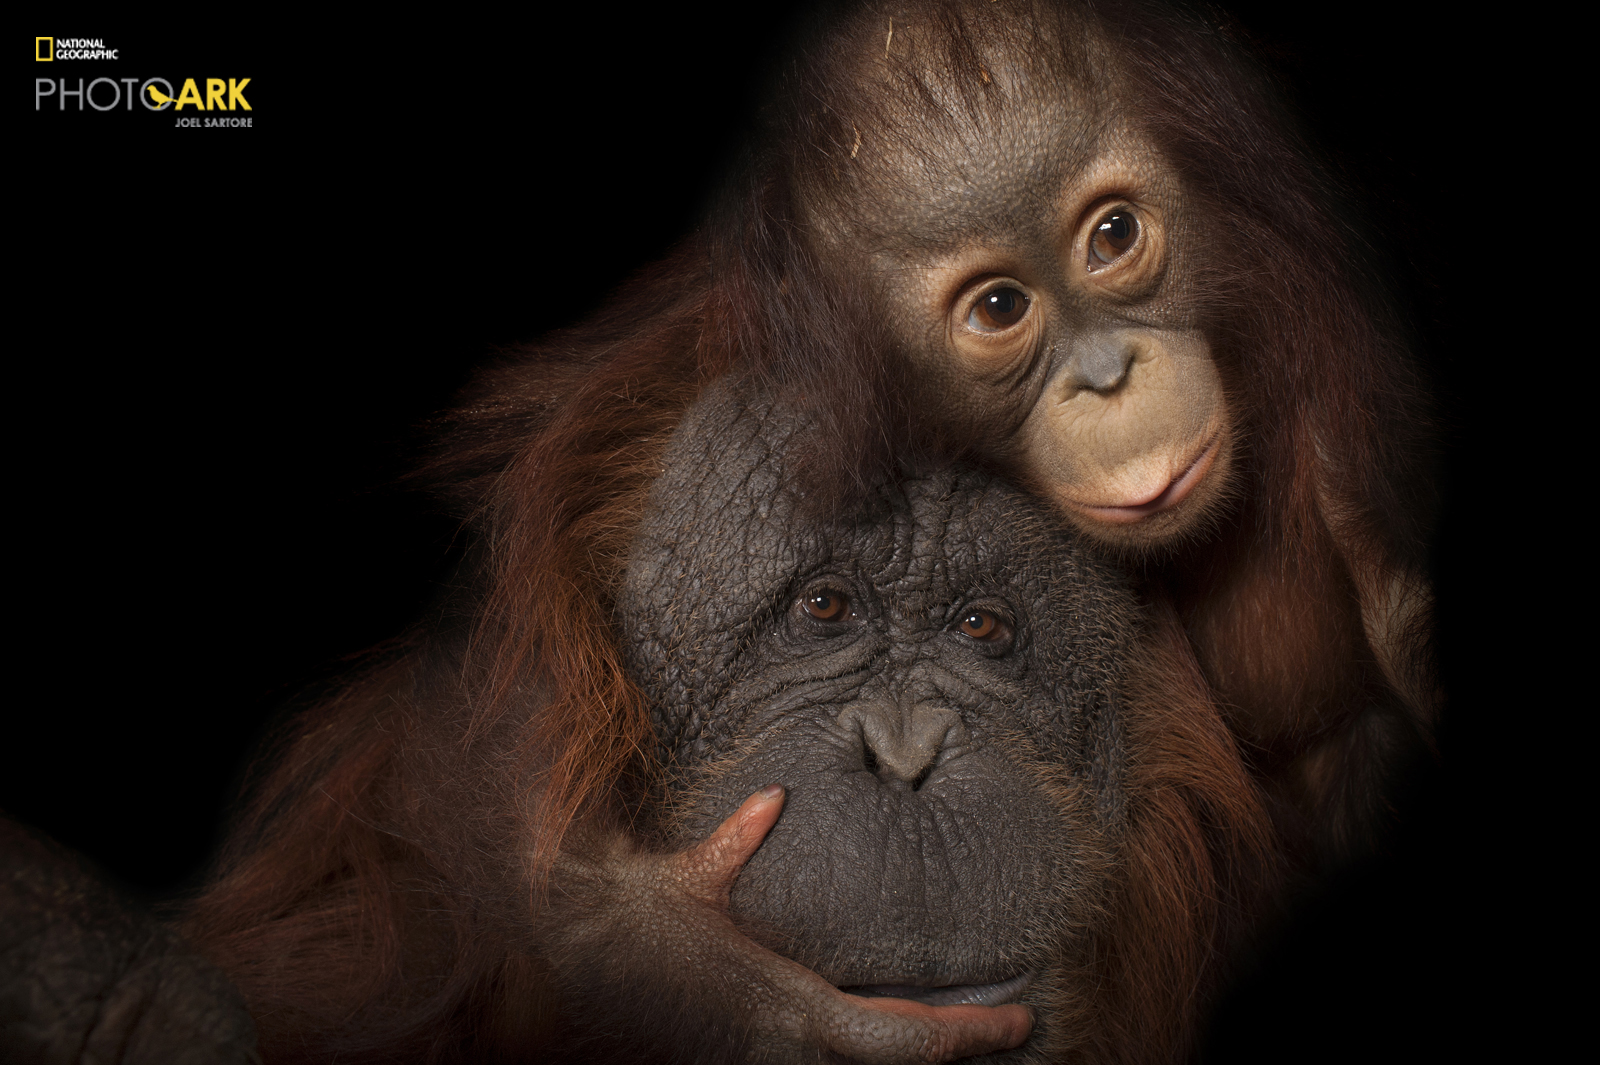 Portrait of Bornean Orangutan from Joel Sartore's Photo Ark project